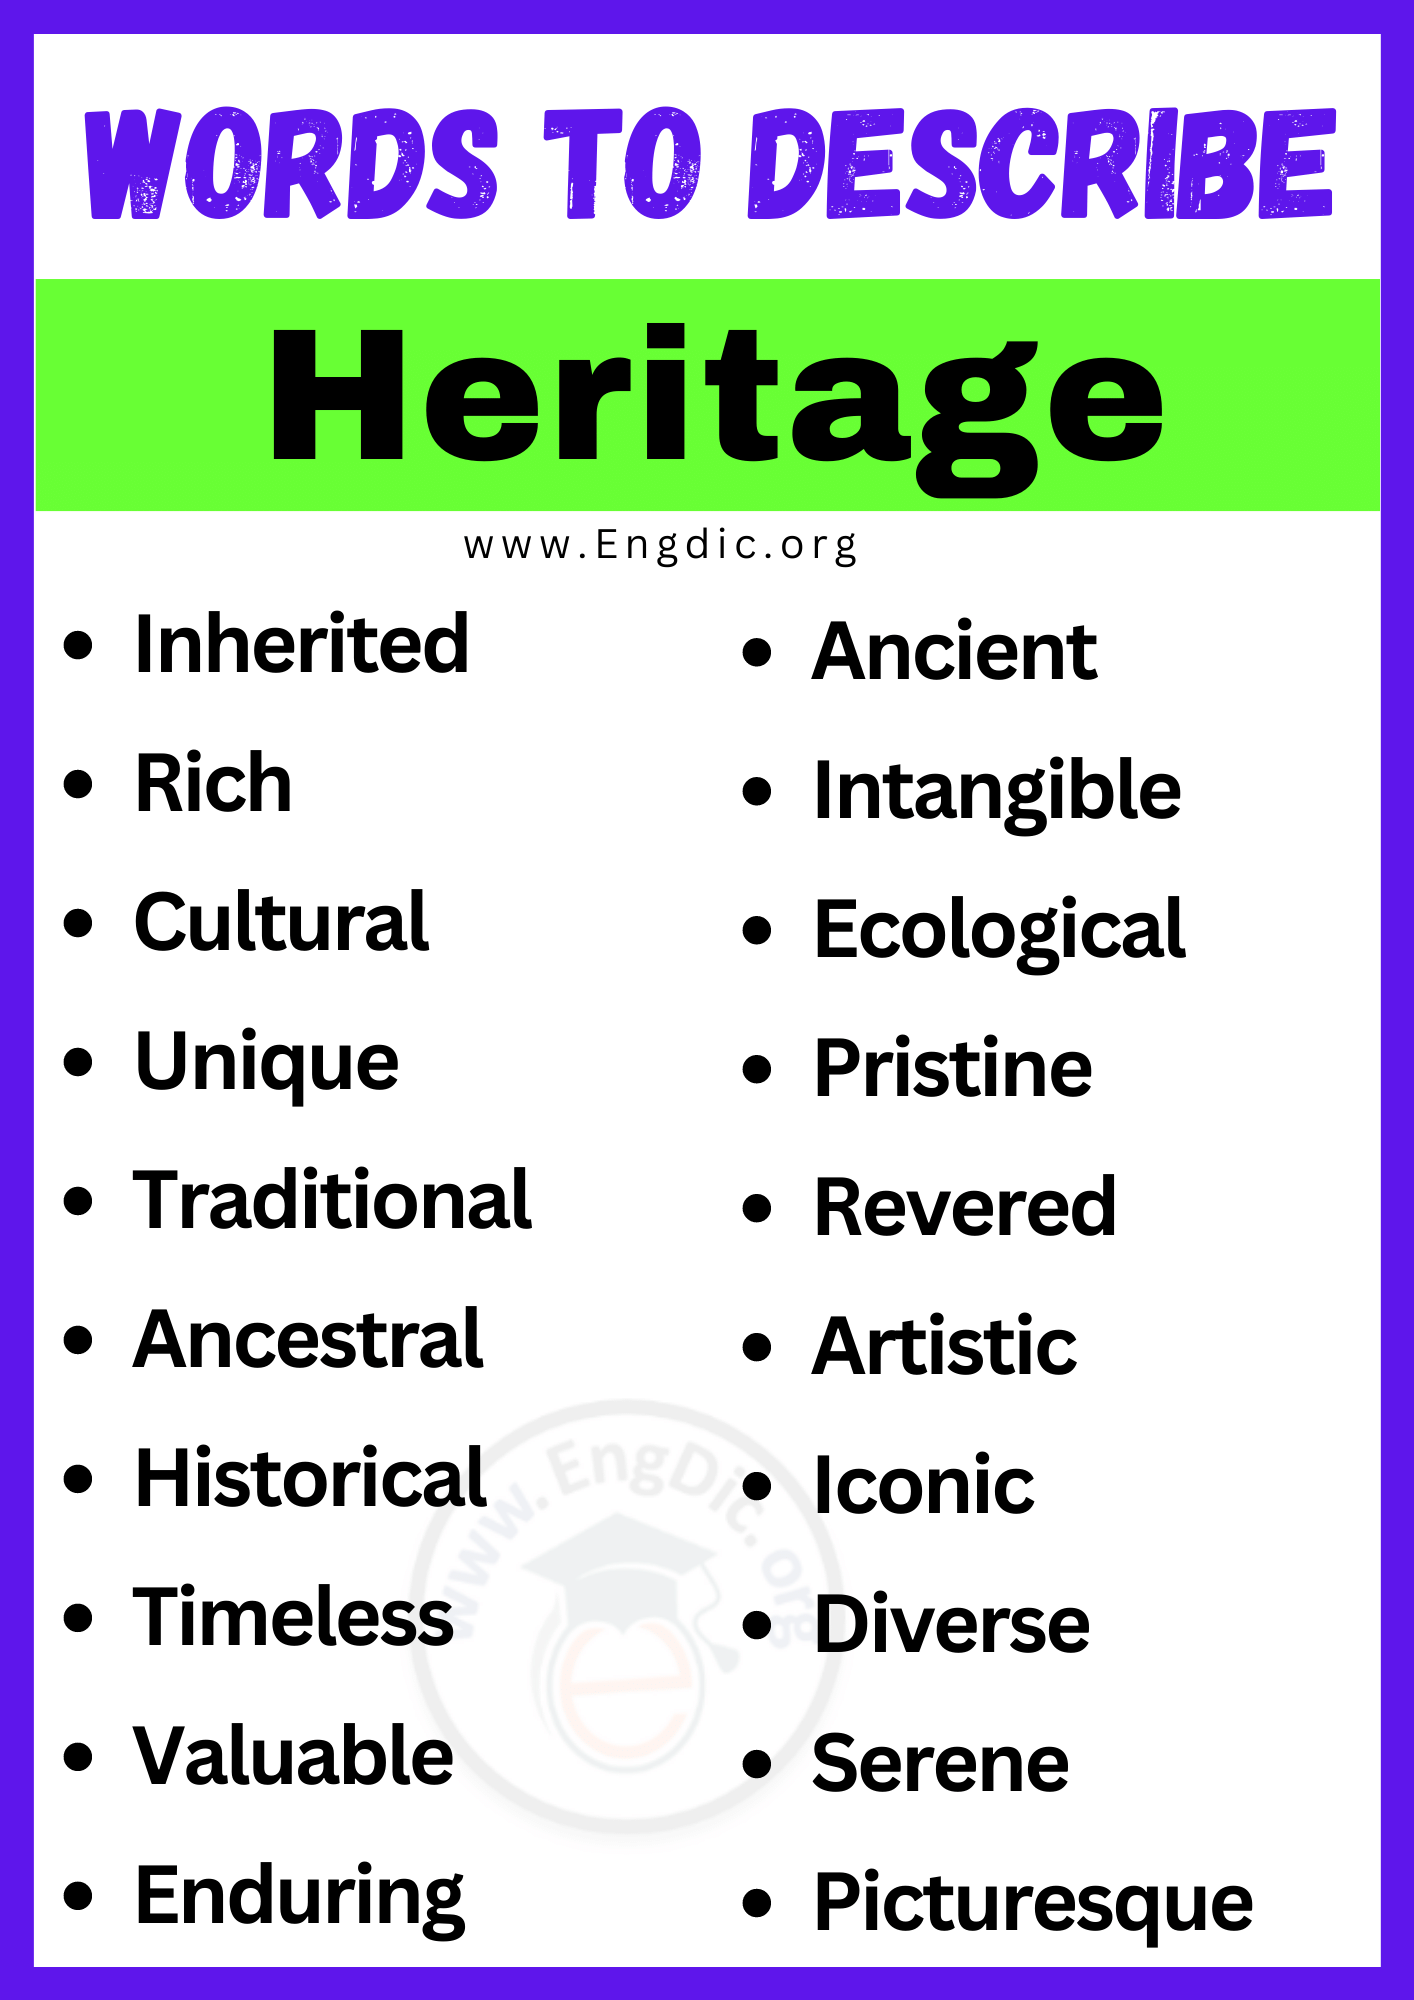 Words to Describe Heritage